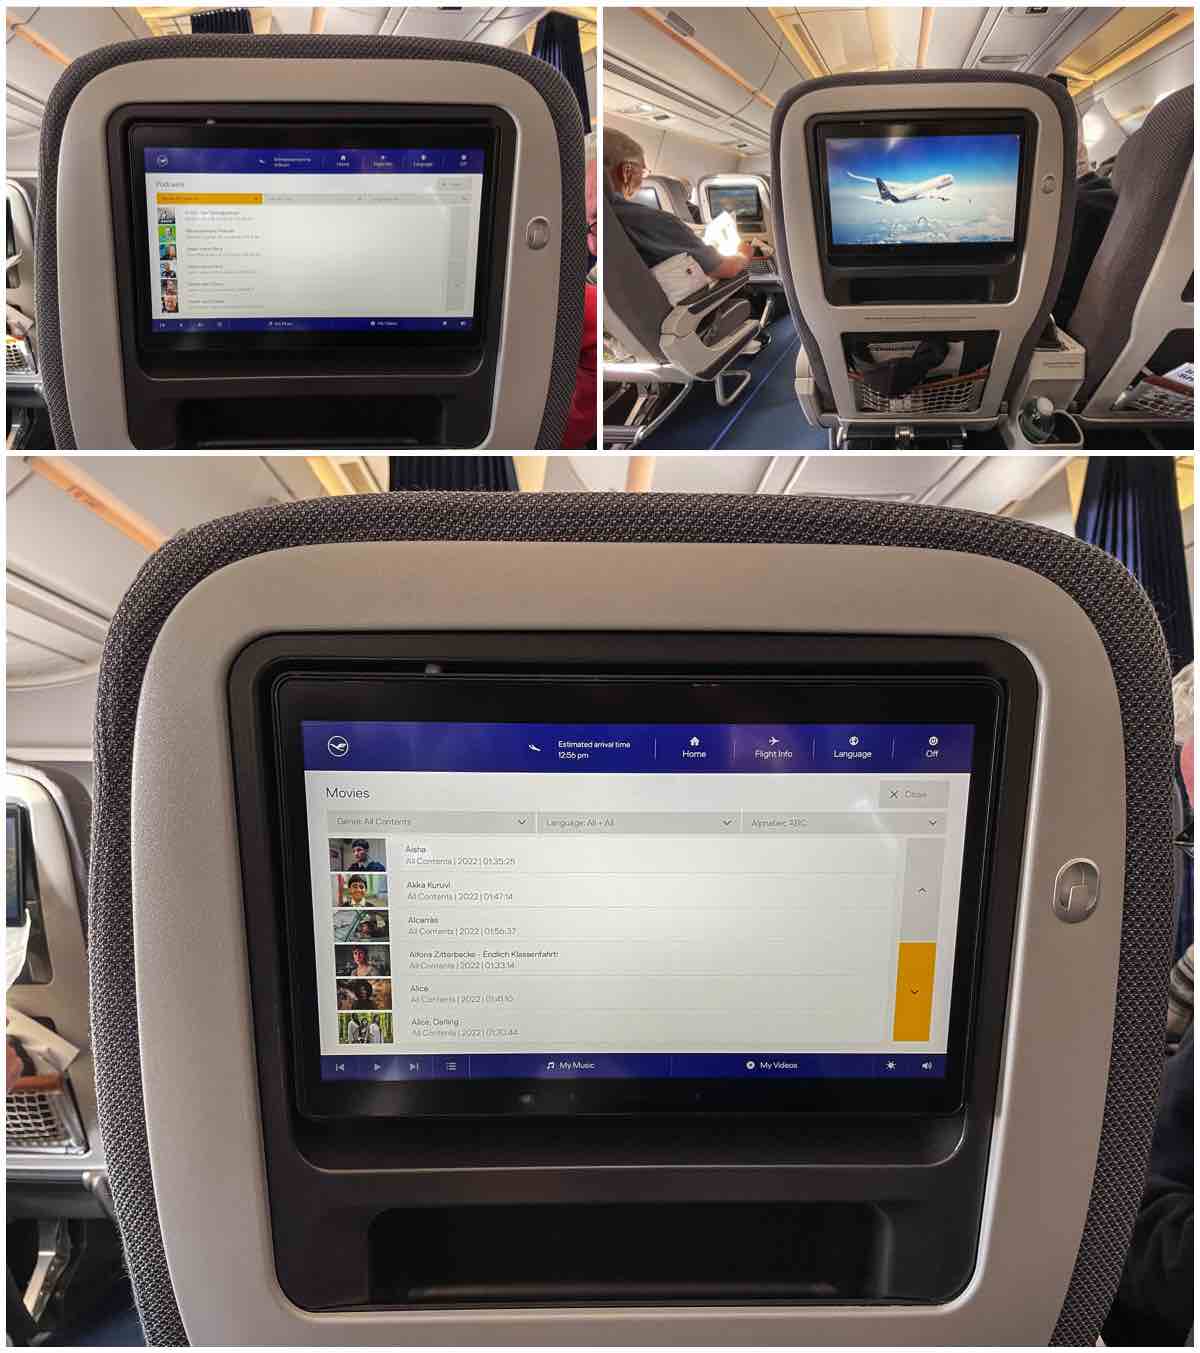 Lufthansa a350-900 premium economy video entertainment content library 